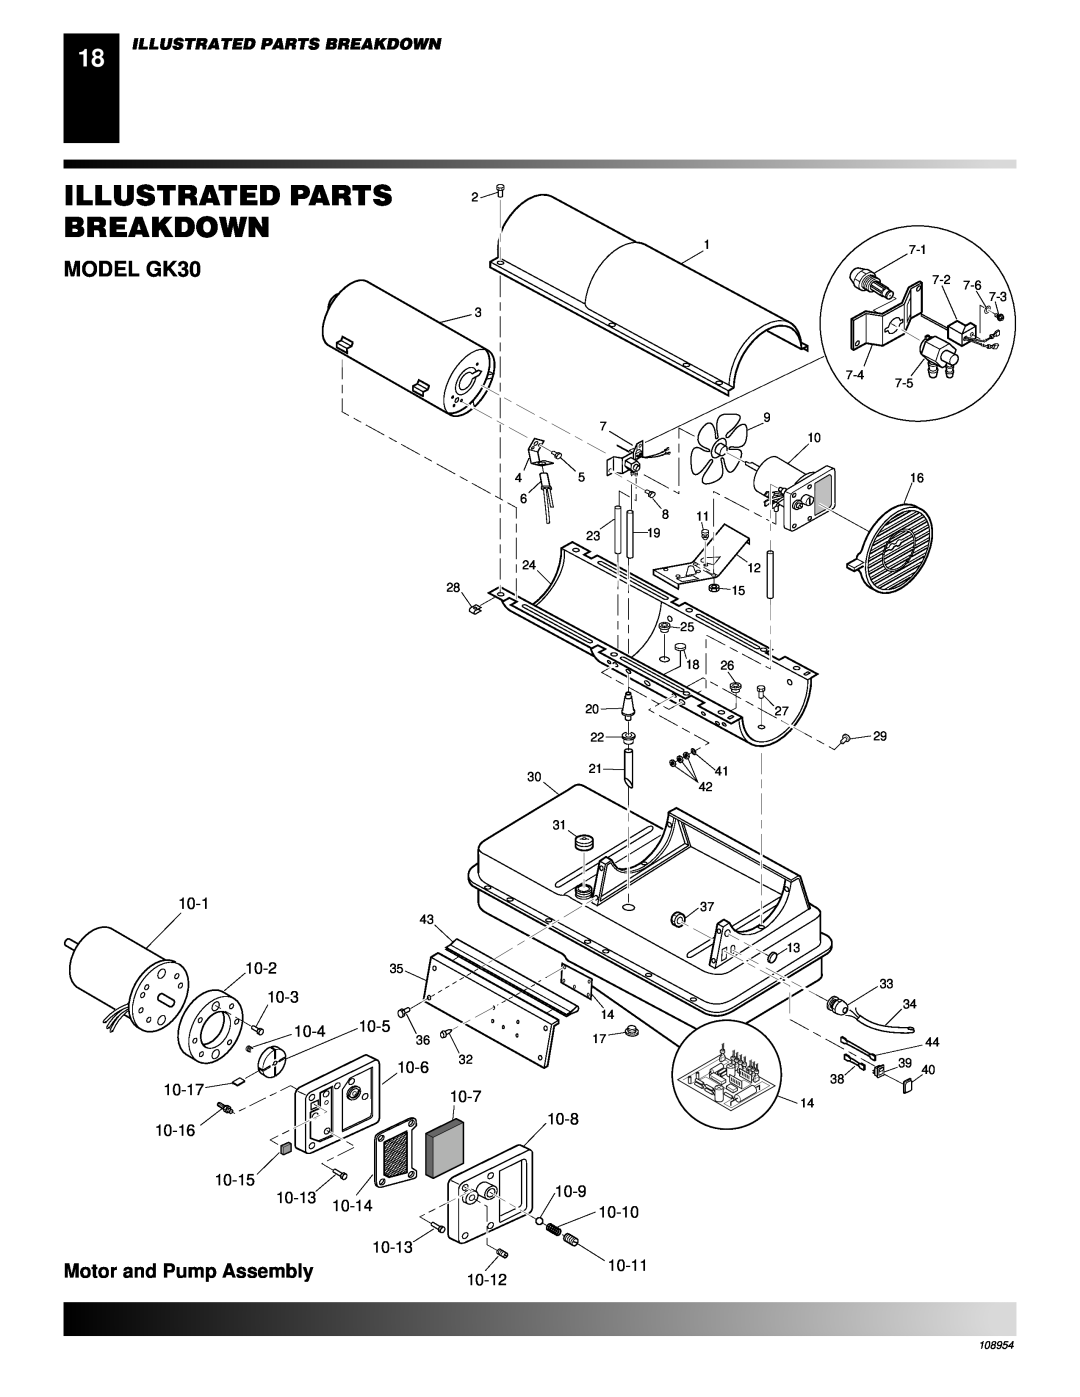 Desa GK20 owner manual MODEL GK30, Illustrated Parts Breakdown, Motor and Pump Assembly 